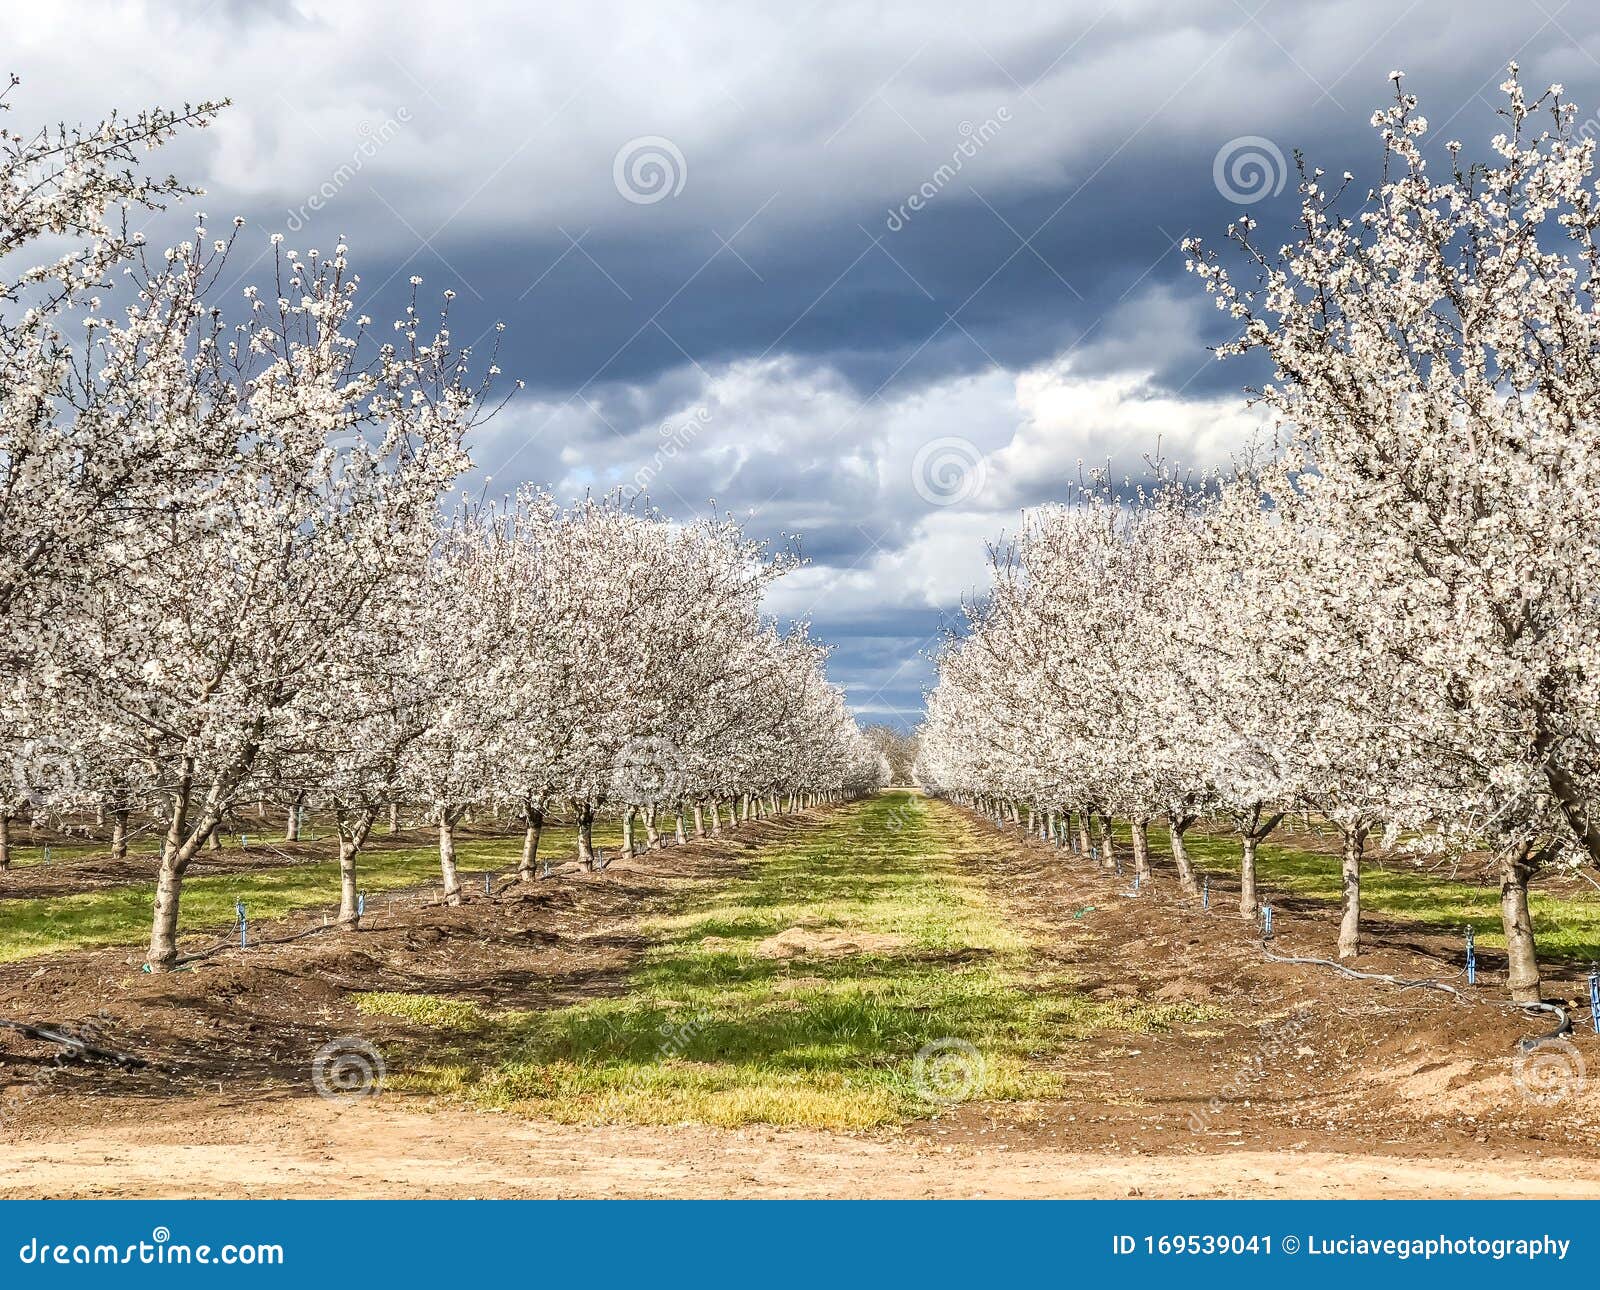 springtime orchards landscape in modesto a california